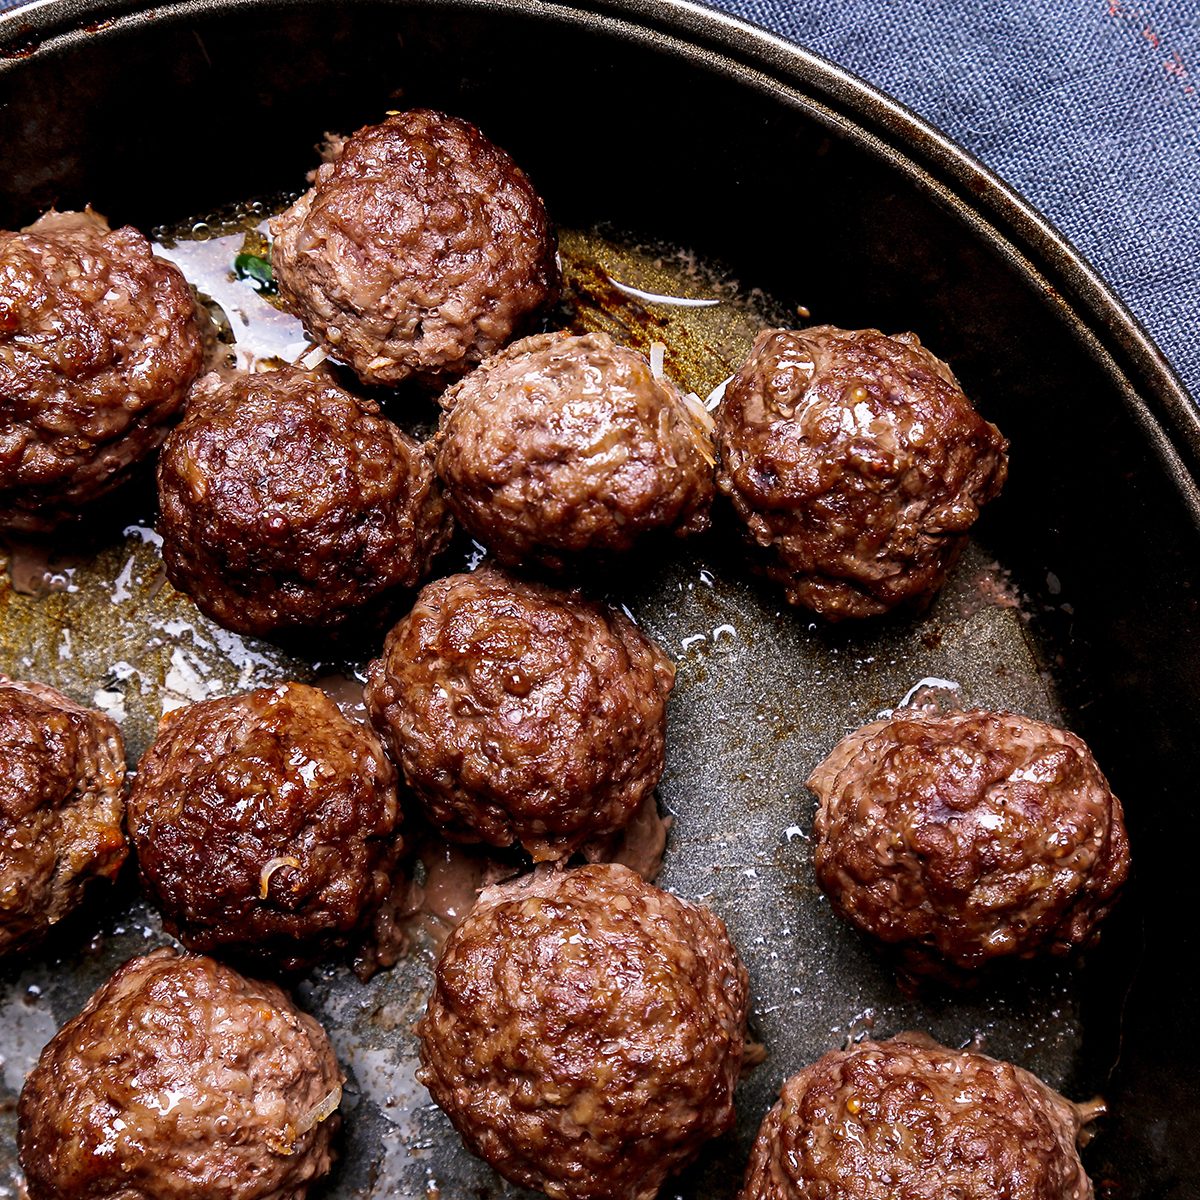 Meatballs in a pan